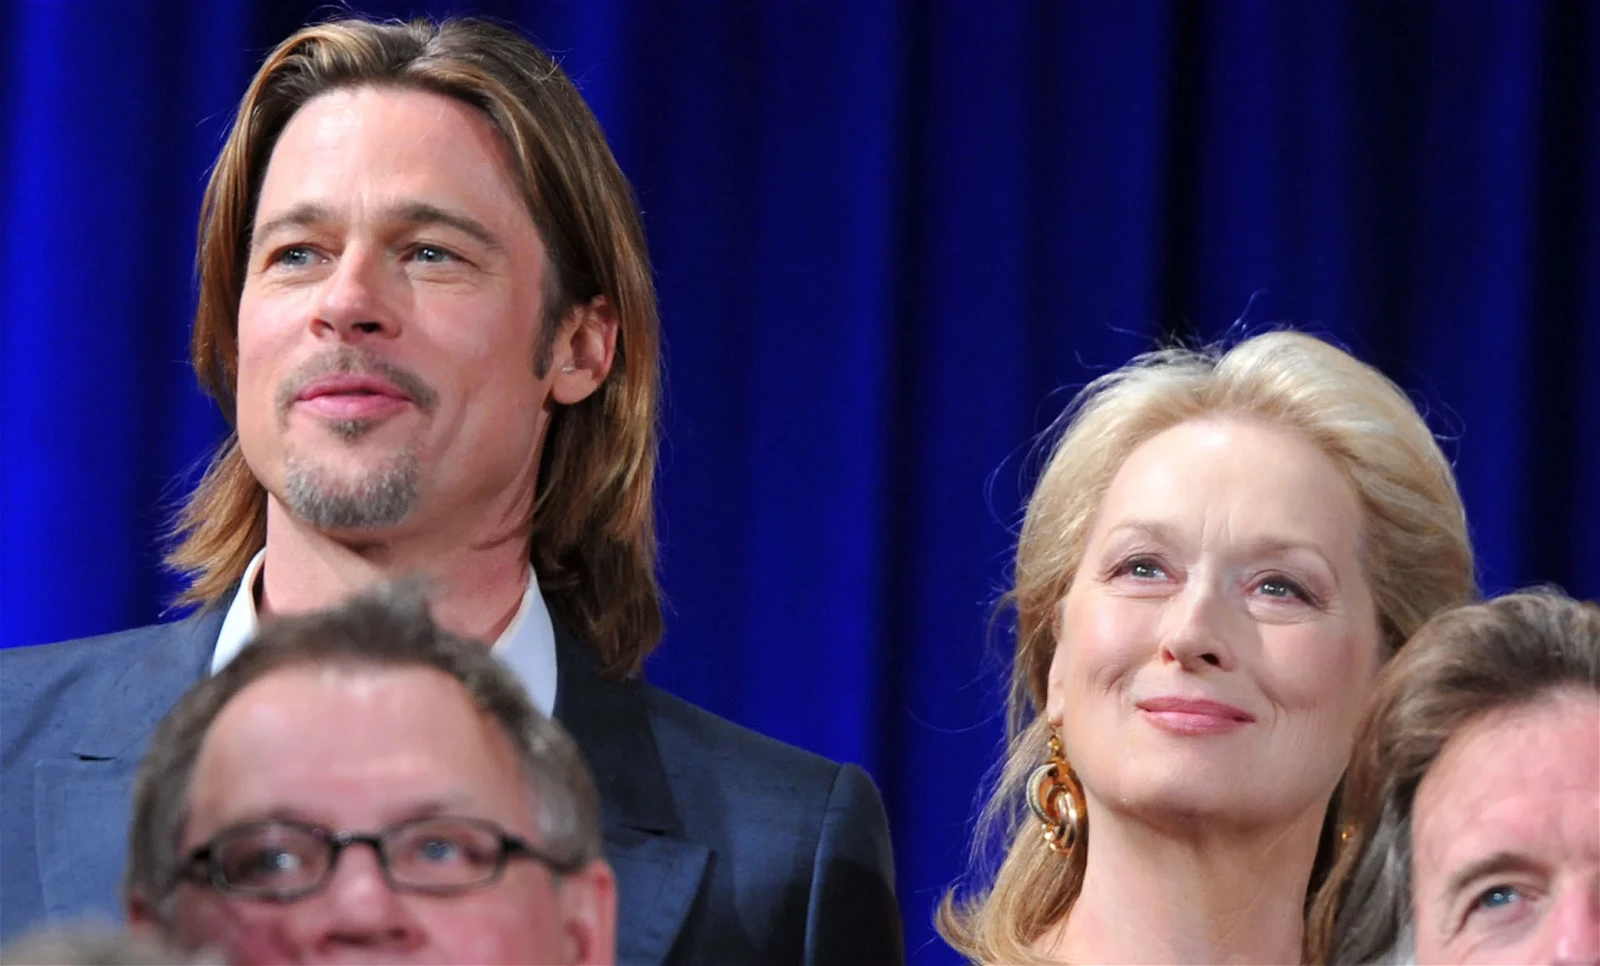 Brad Pitt and Meryl Streep